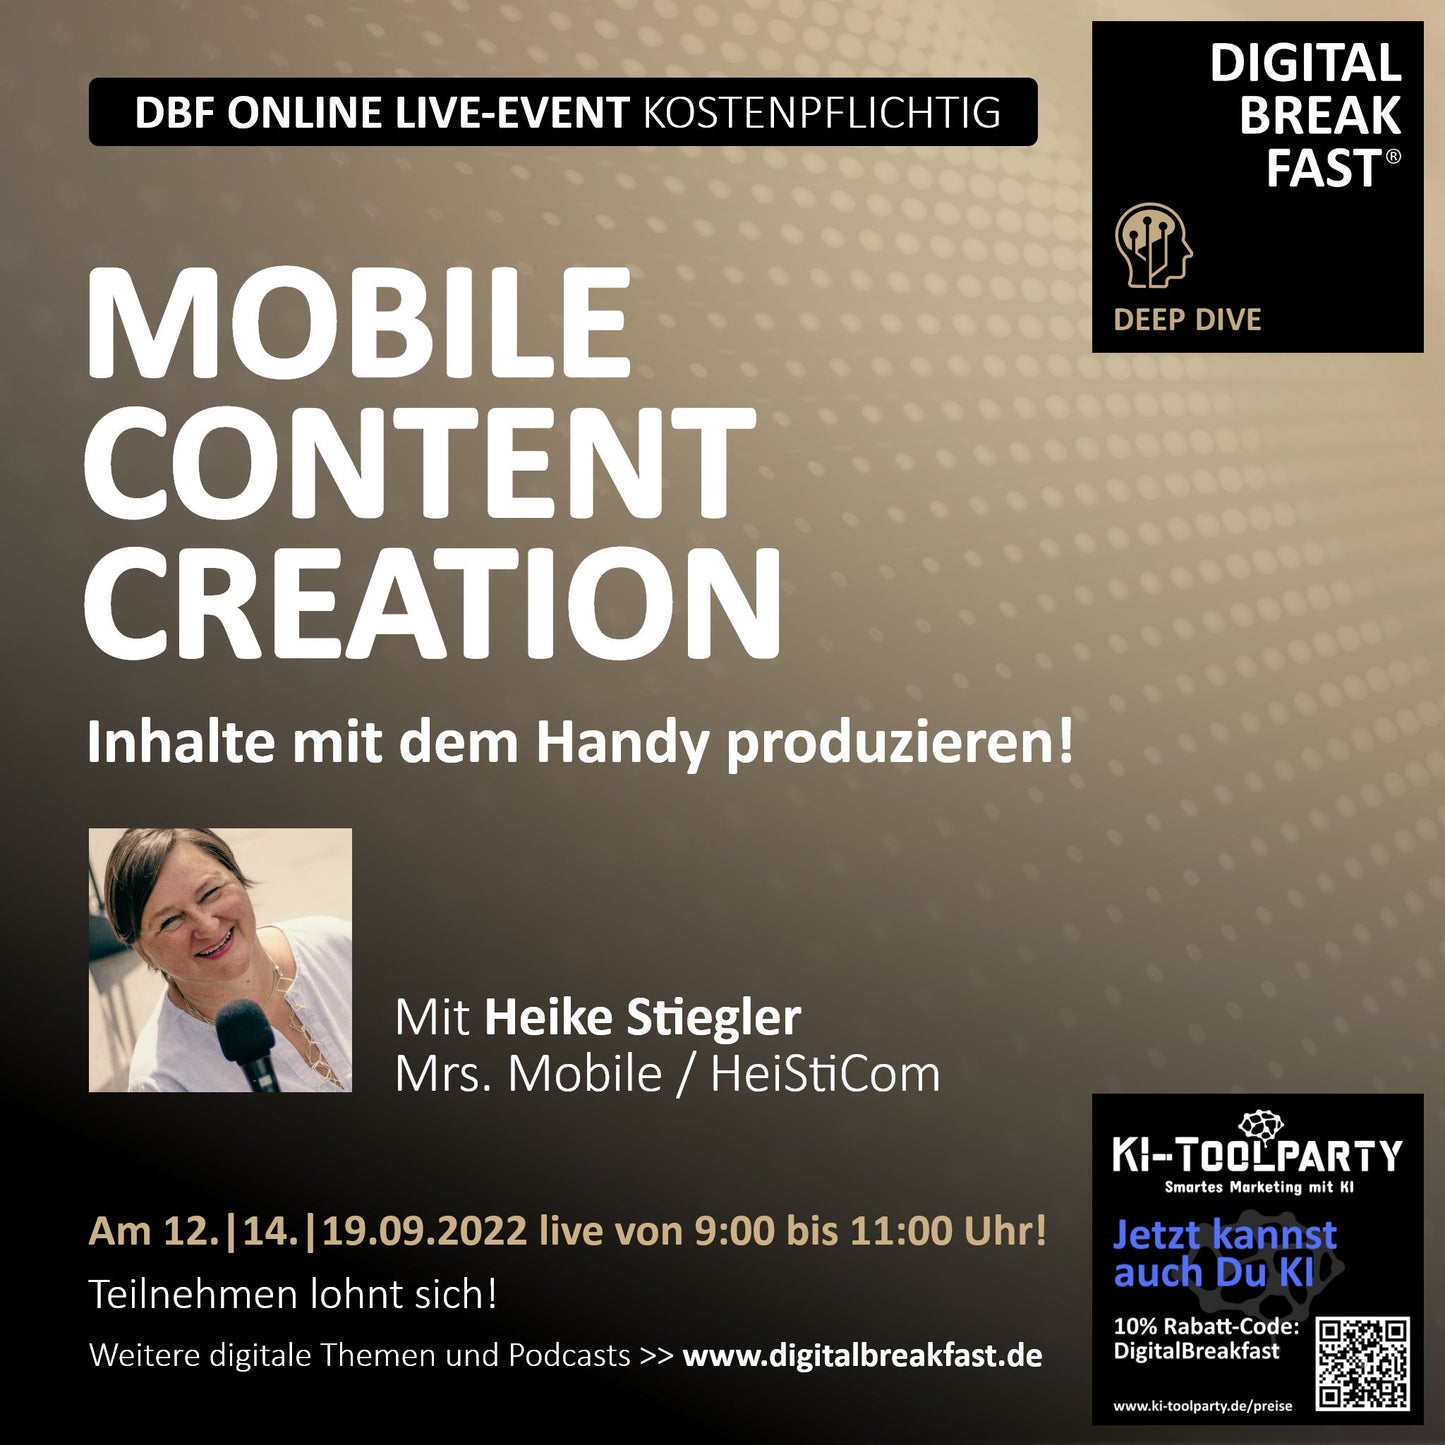 DEEP DIVE | "Mobile Content Creation" mit Heike Stiegler